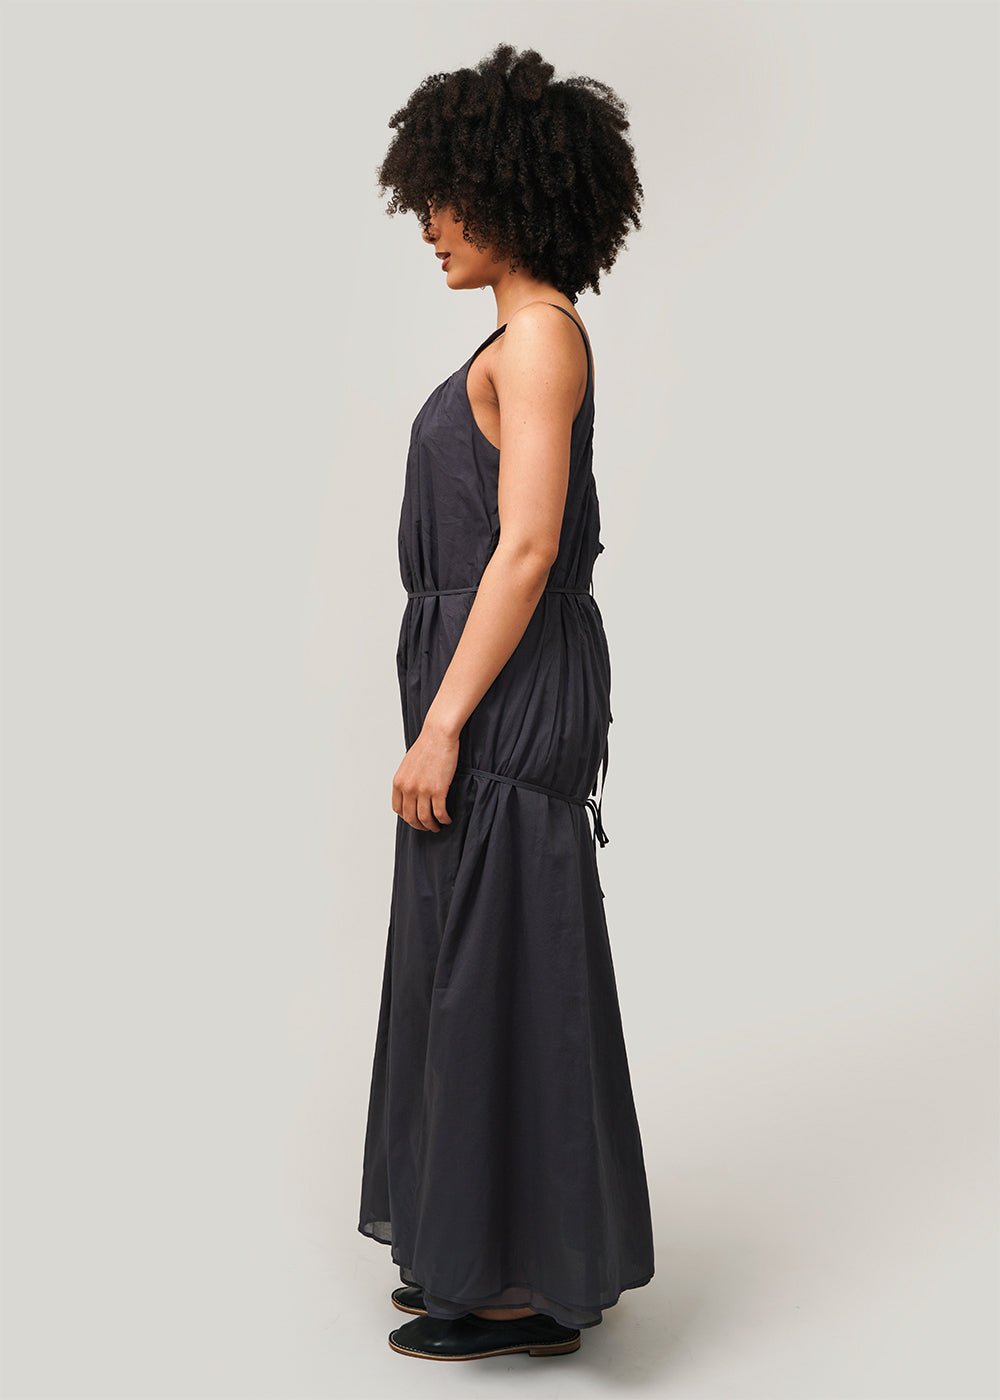 AMOMENTO Navy Neck Shirring Sheer Long Dress - New Classics Studios Sustainable Ethical Fashion Canada